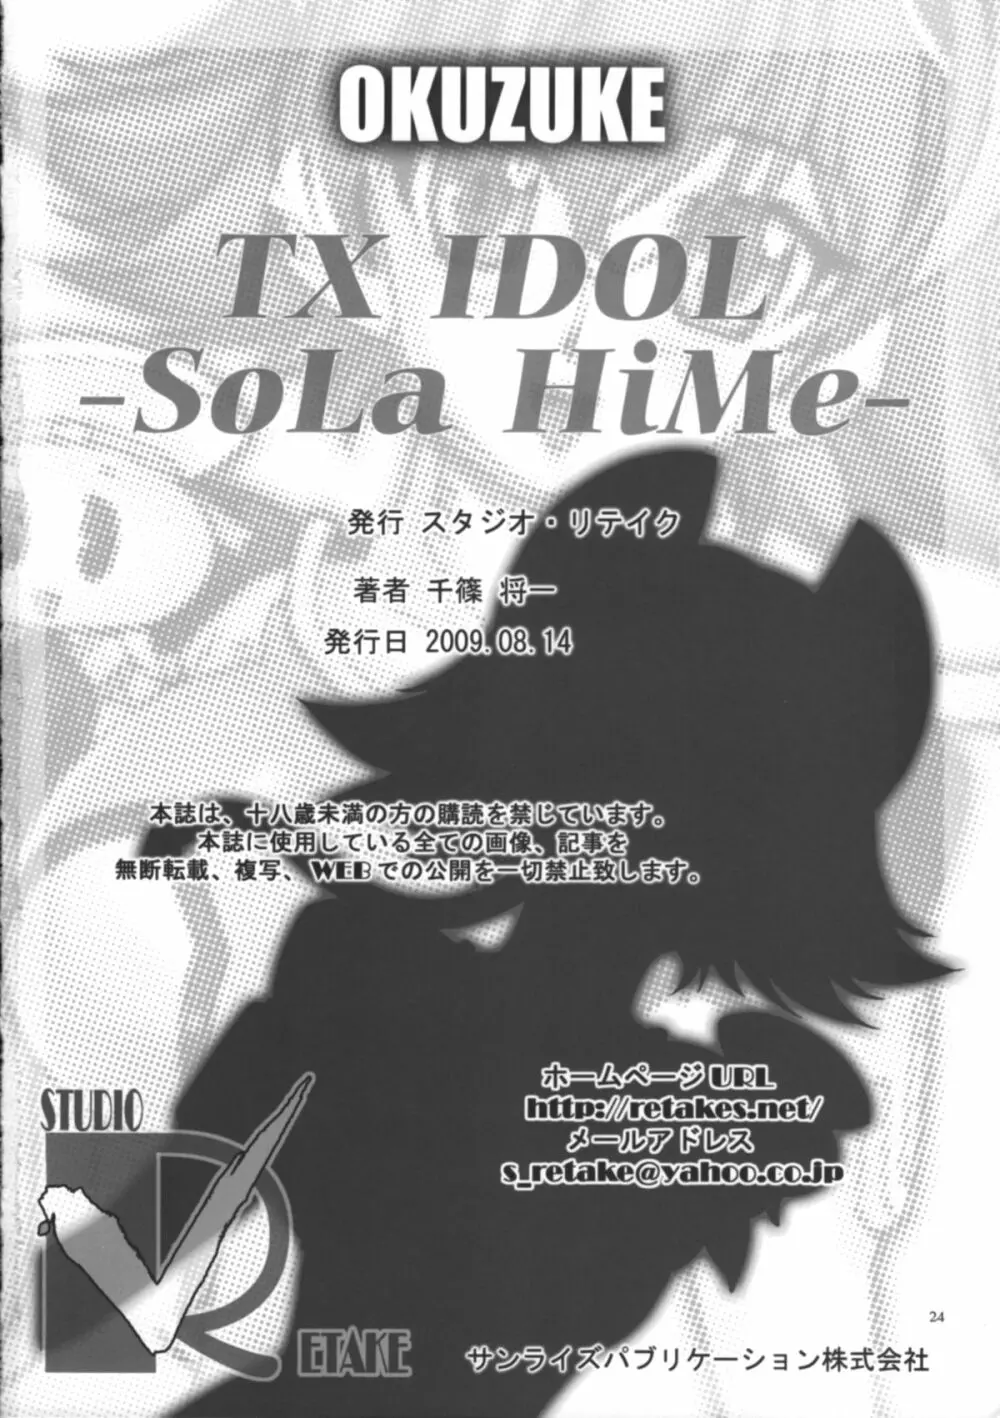 TX IDOL -SoLa HiMe- 25ページ